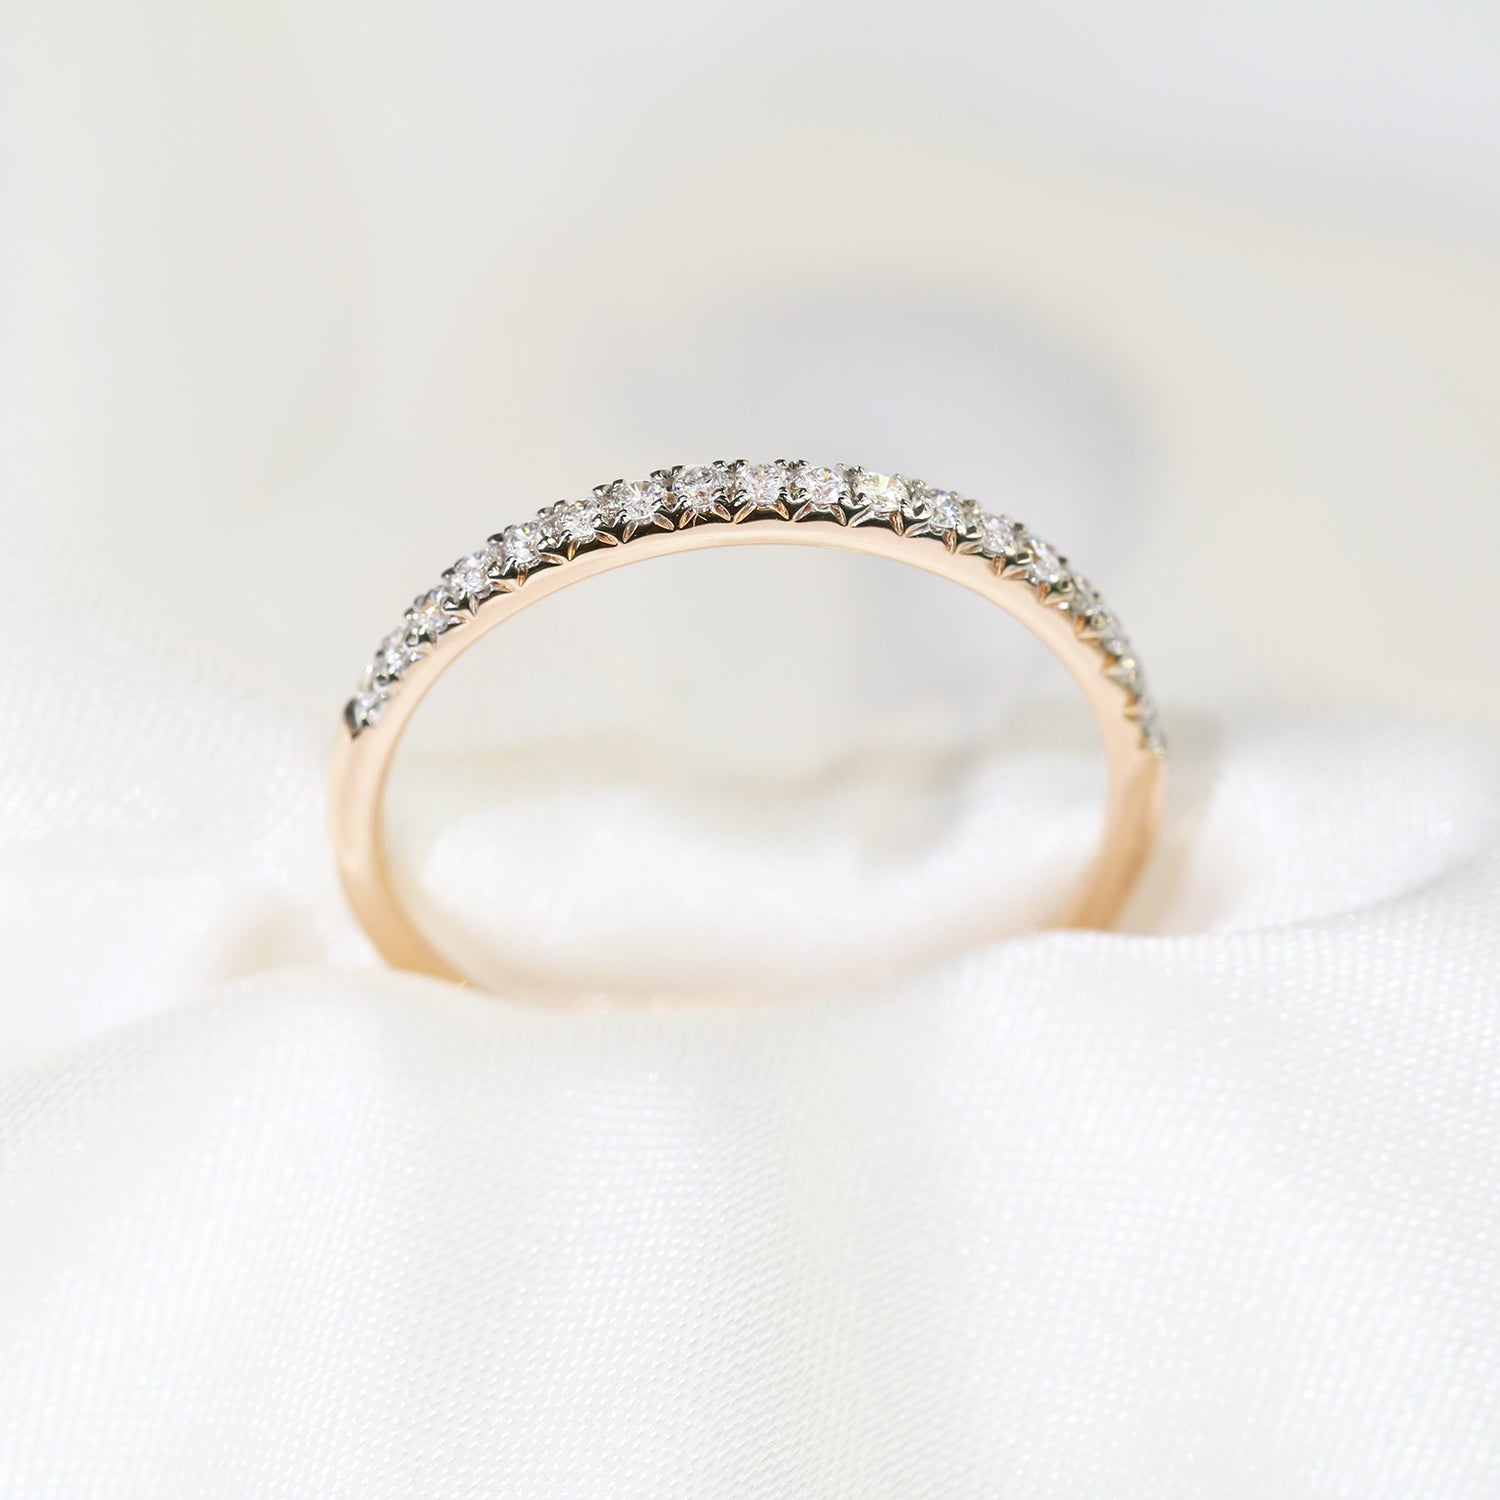   18k玫瑰金鑽石戒指側面 18k Rose Gold Eternity Diamond Ring on side view